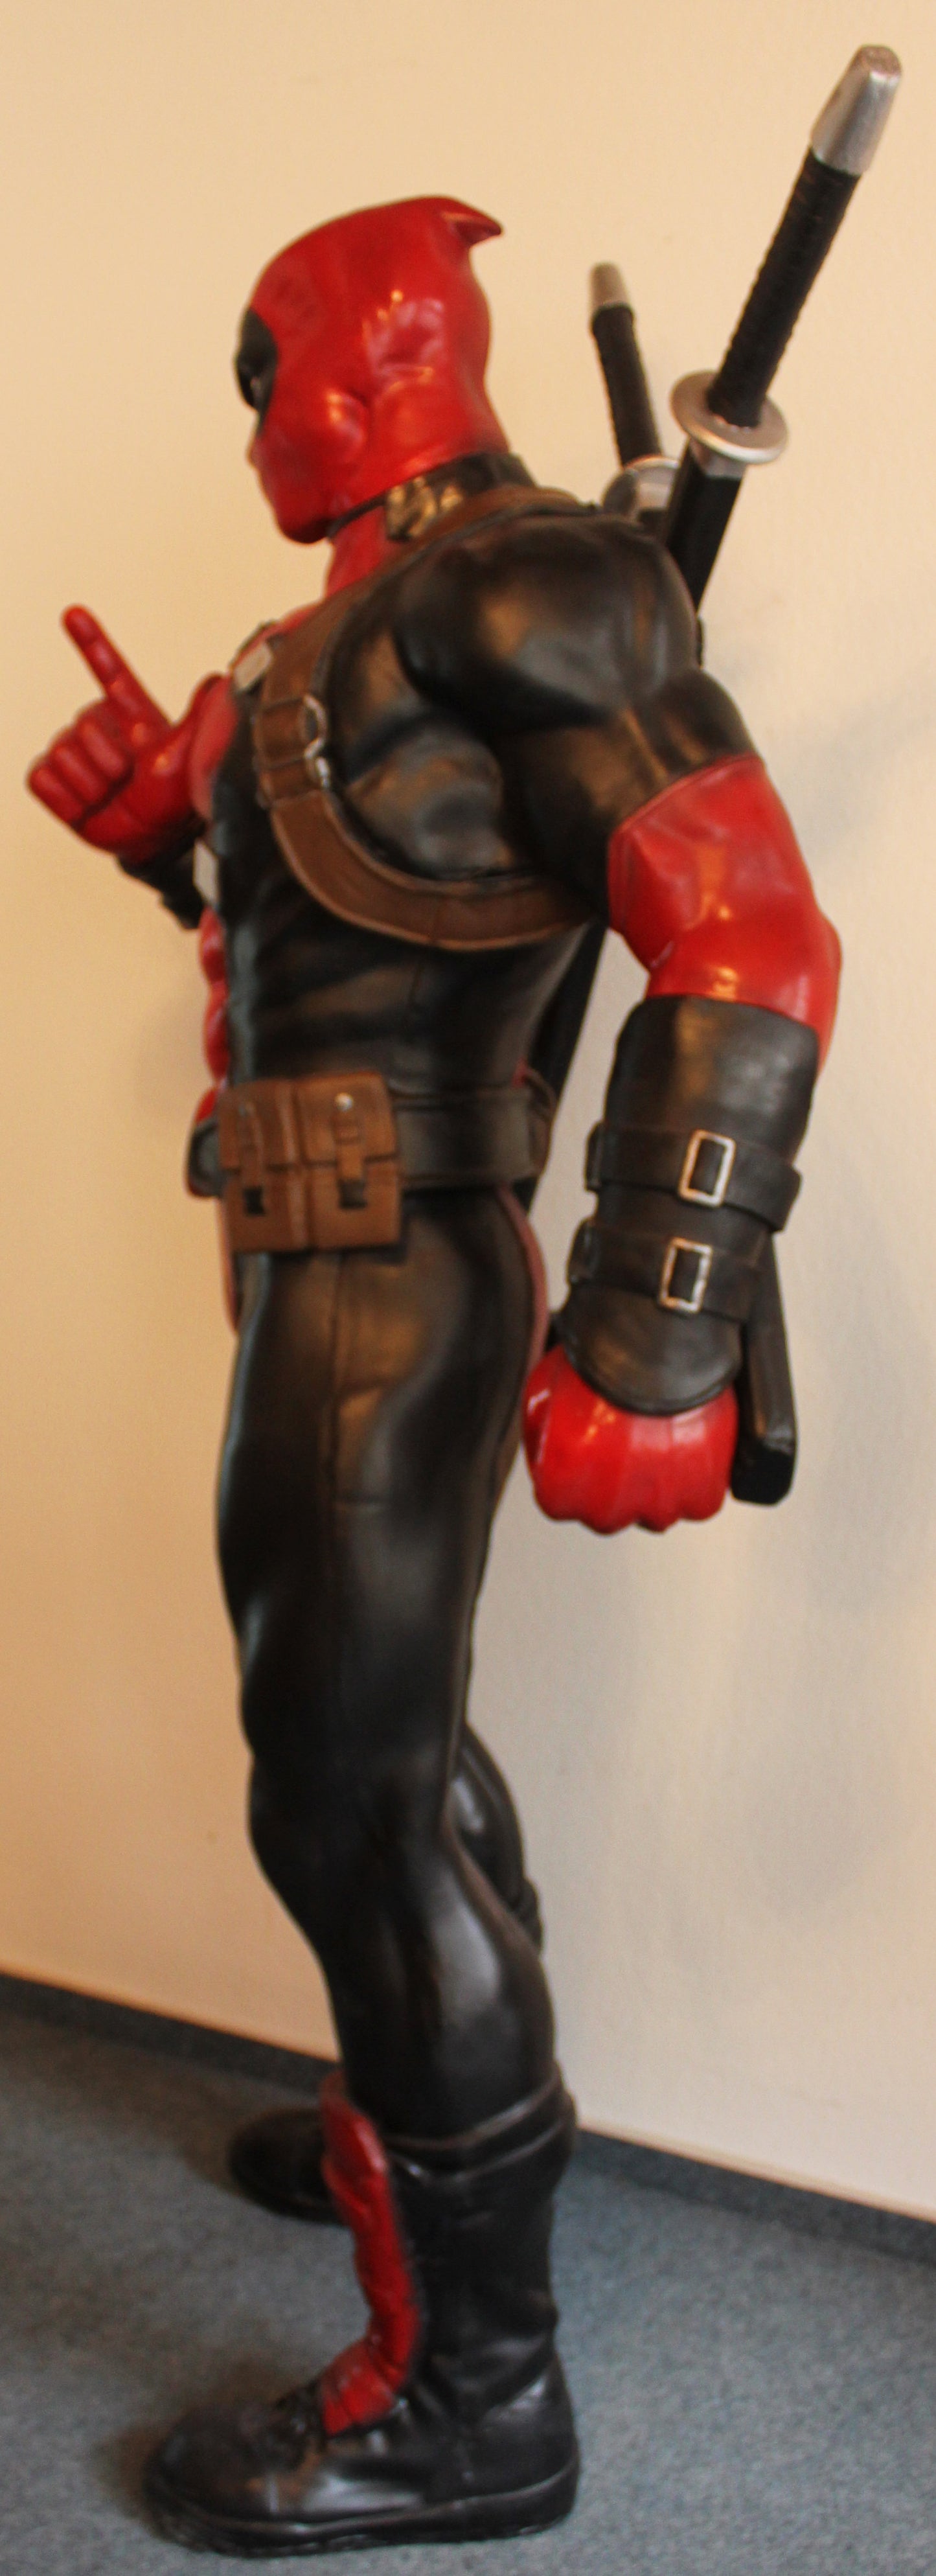 Deadpool Life-Size Statue